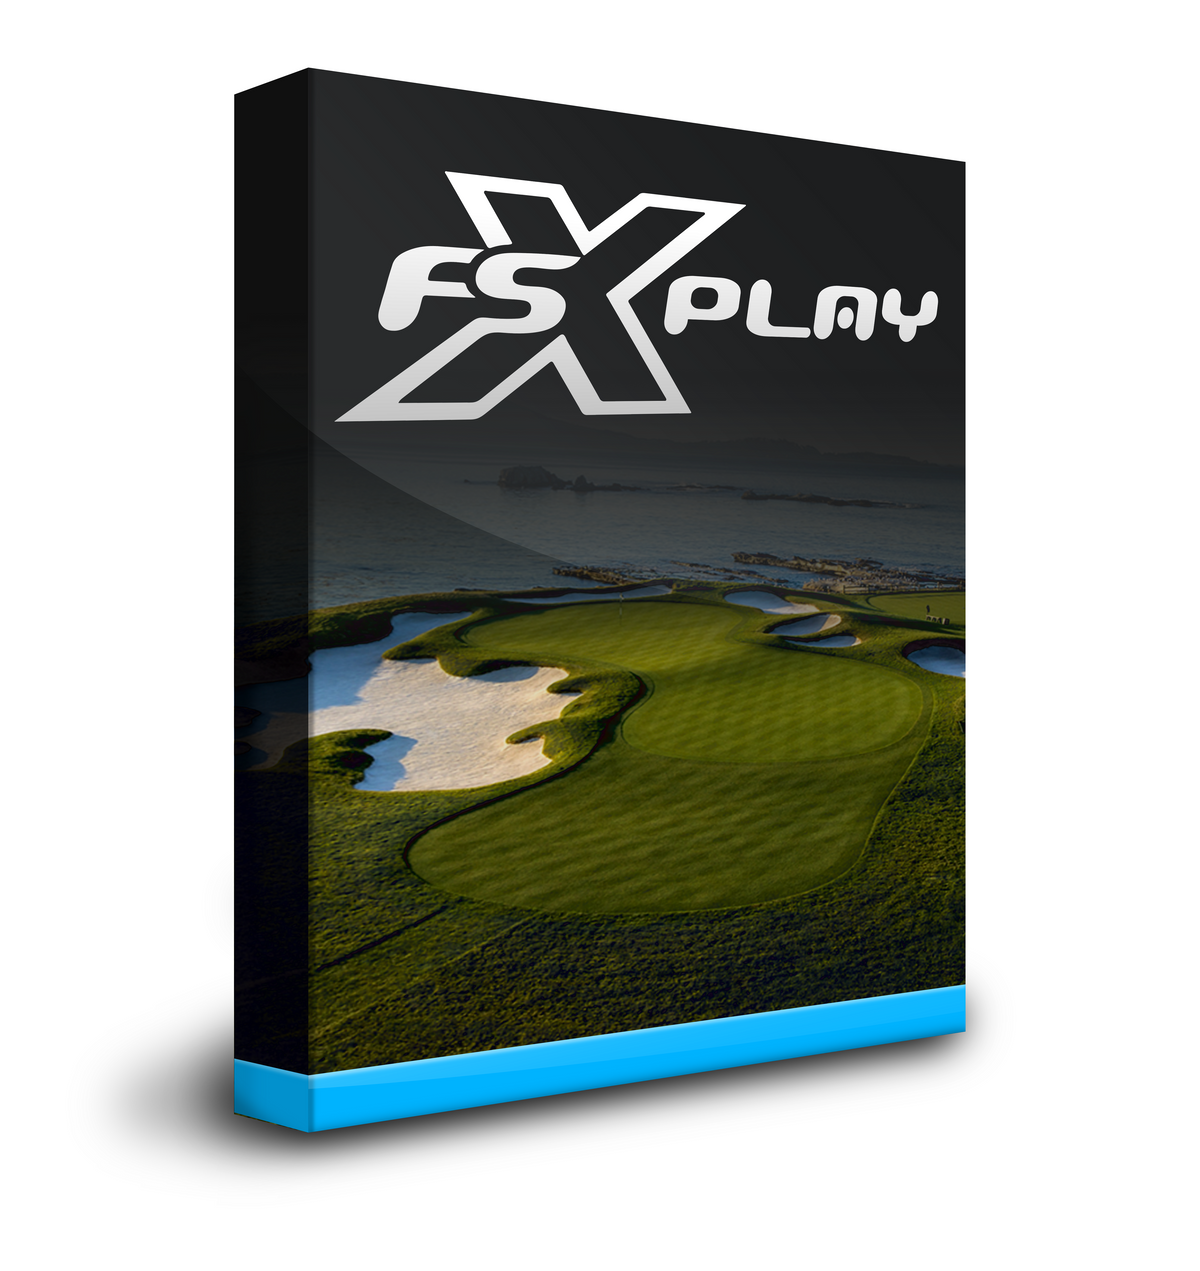 Includes FSX Play Golf Simulator Software